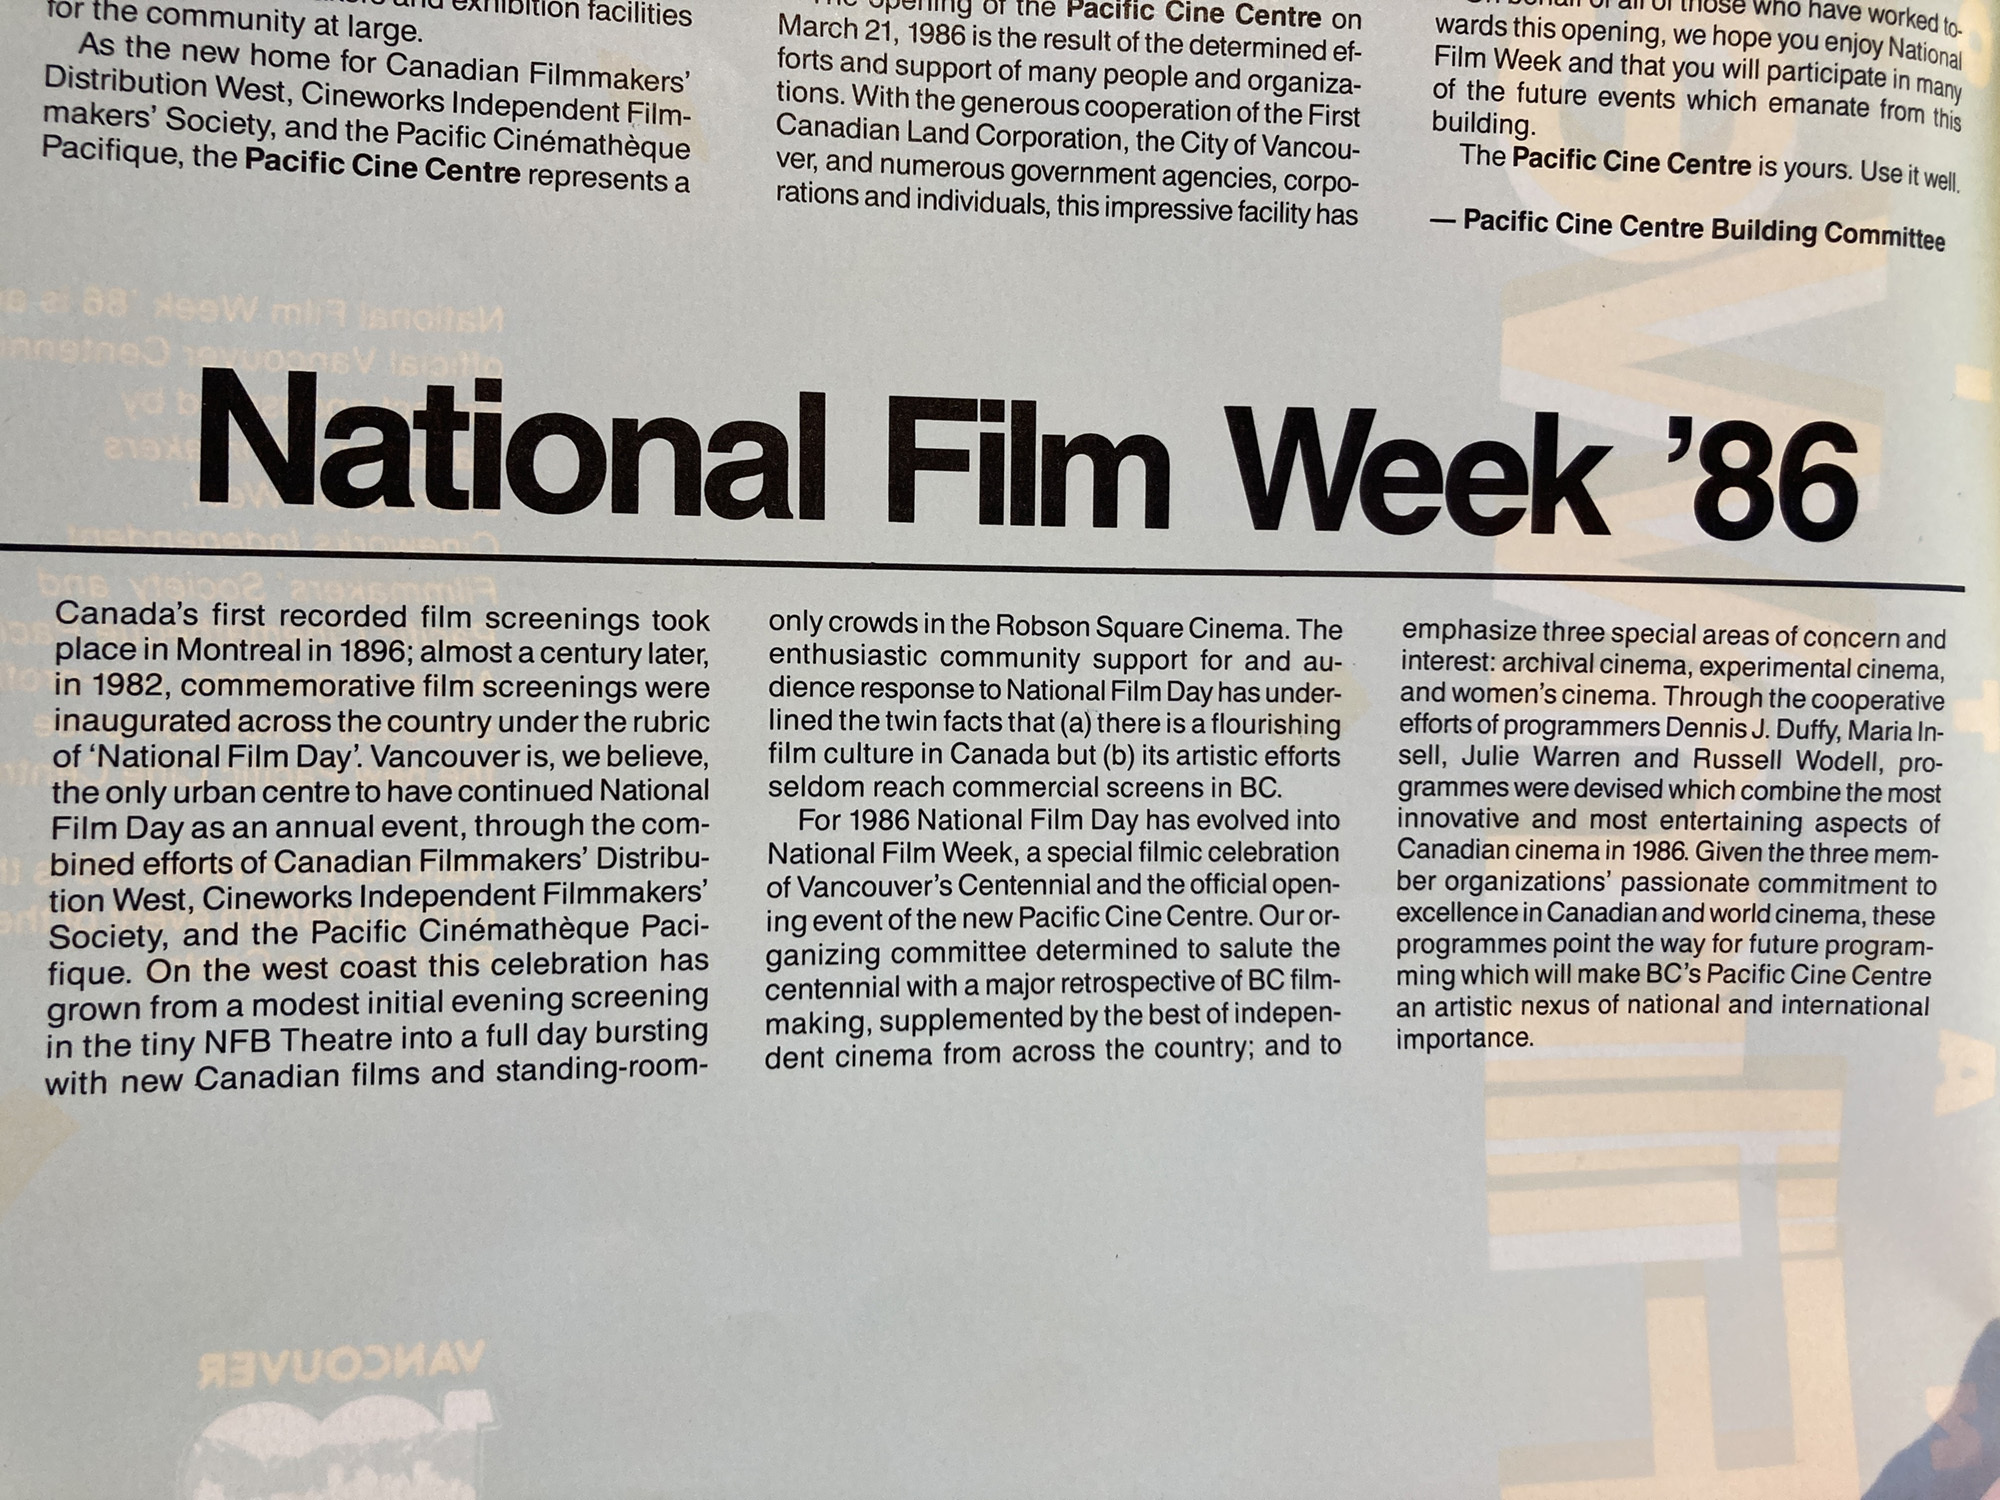 National Film Week intro